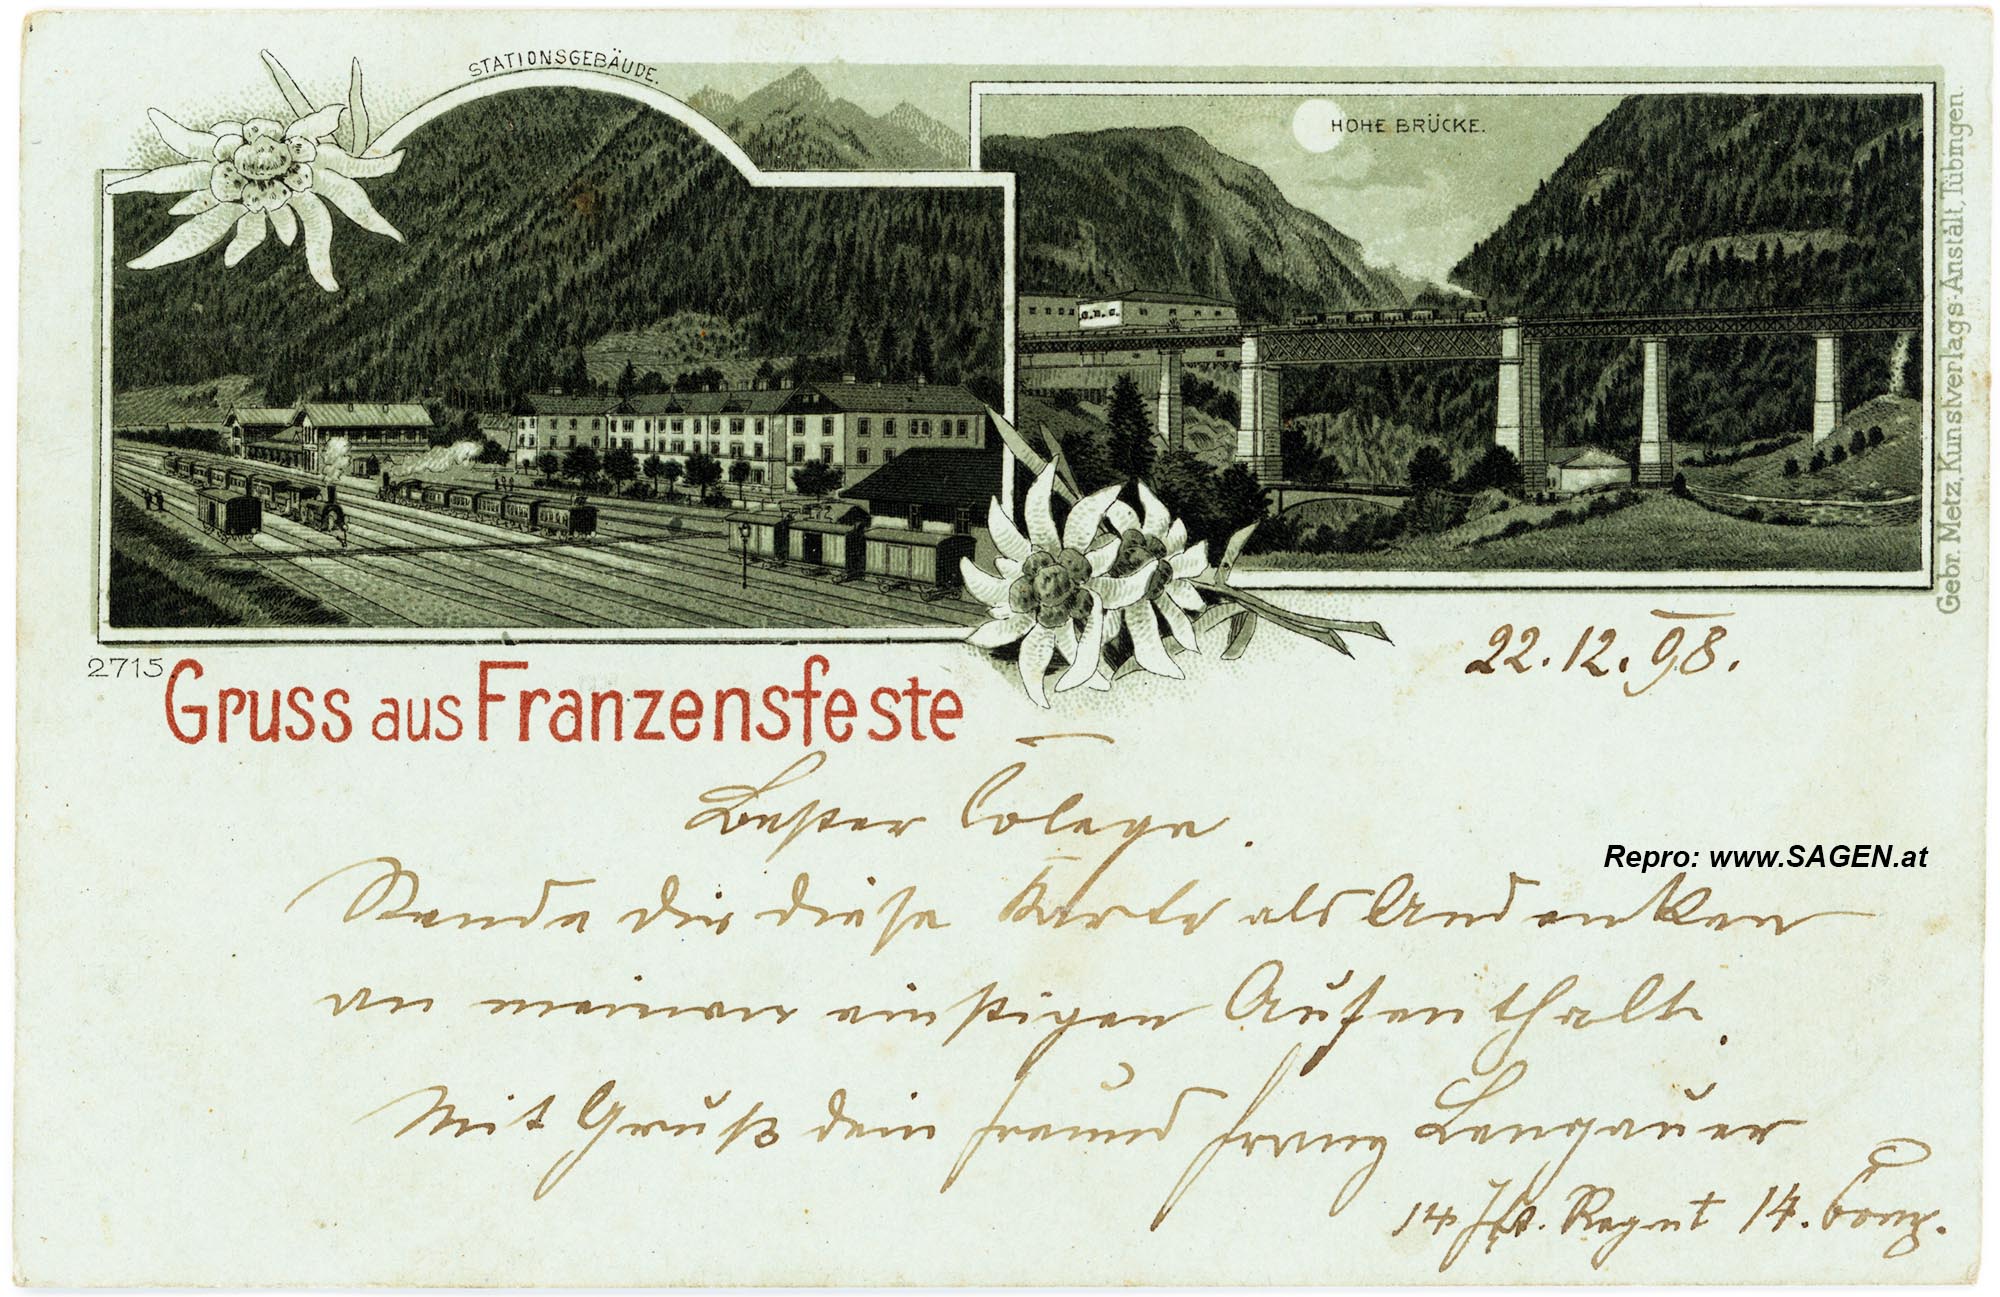 Gruß aus Franzensfeste - Korrespondenzkarte 1898